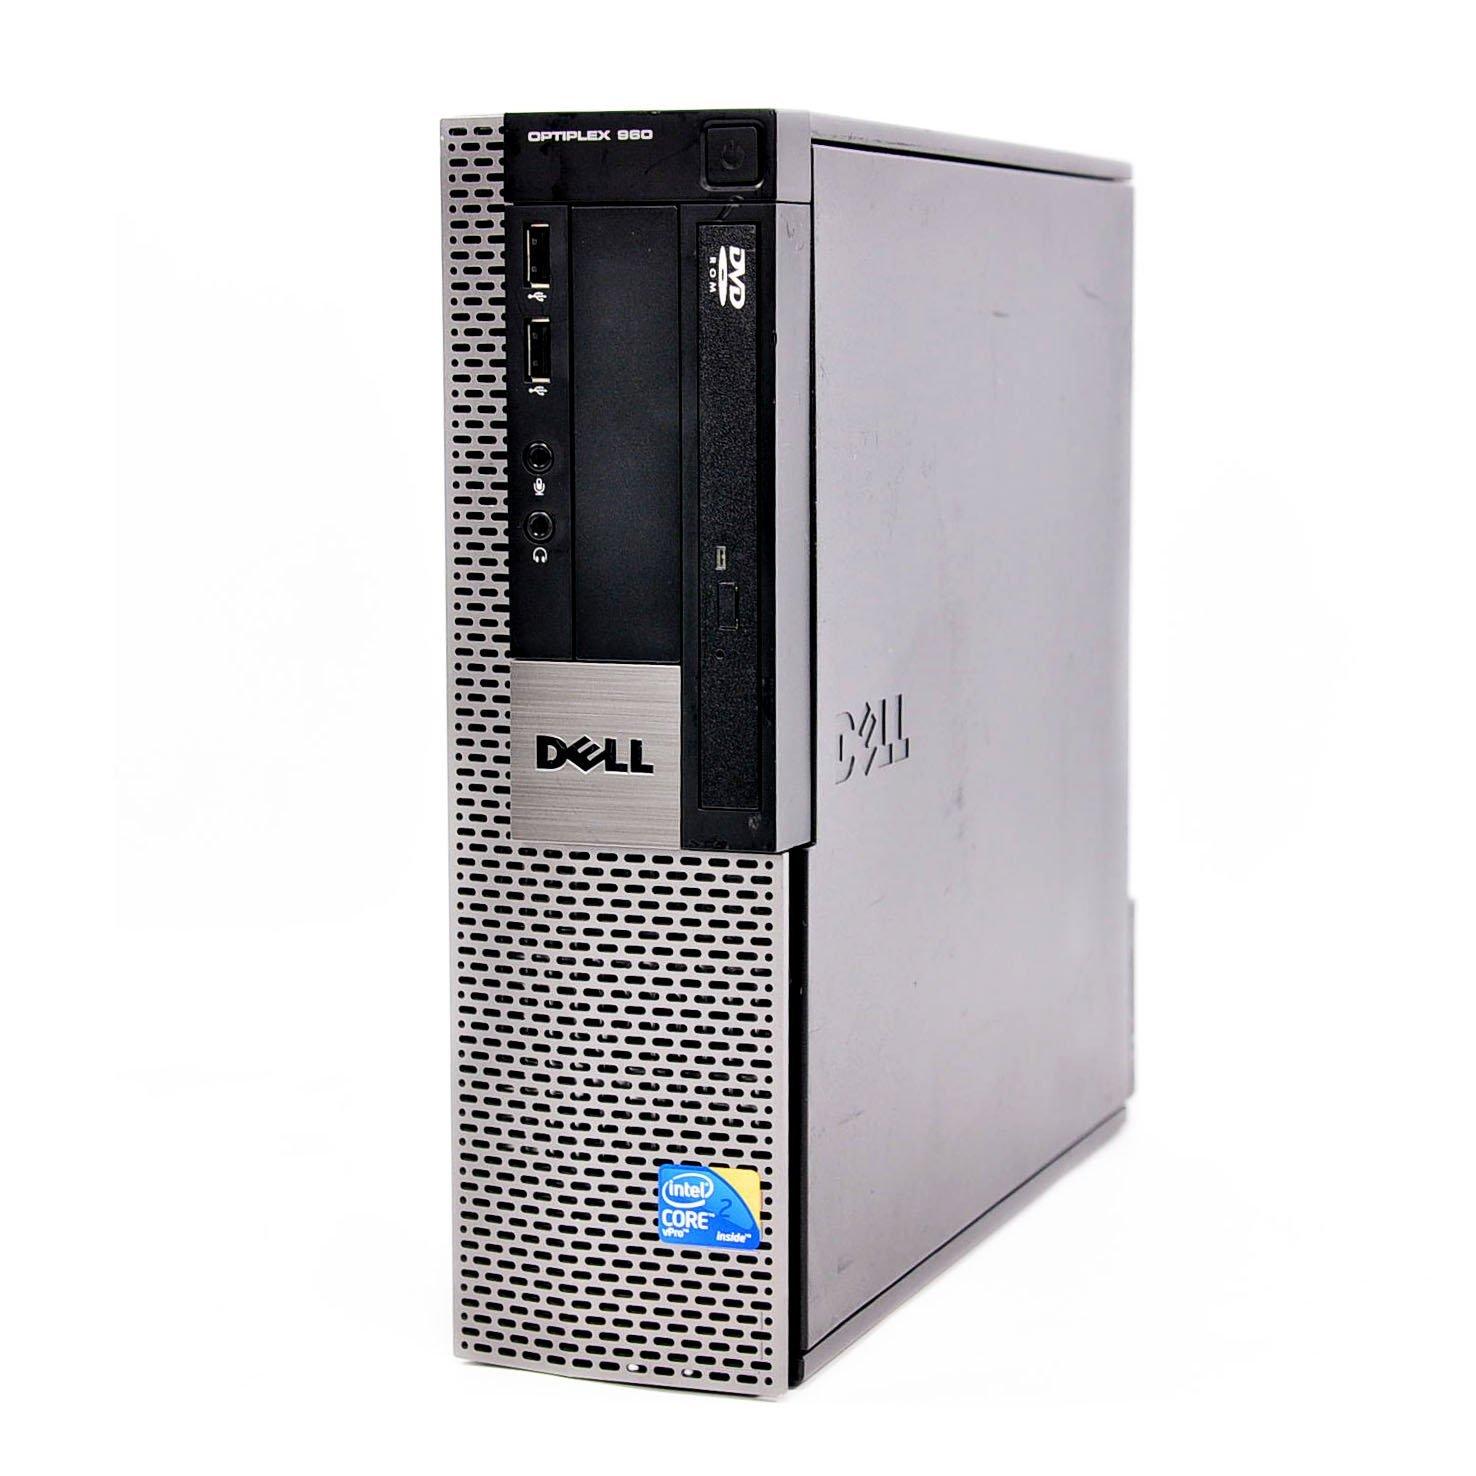 Máy tính Dell OPtiplex 960 SFF